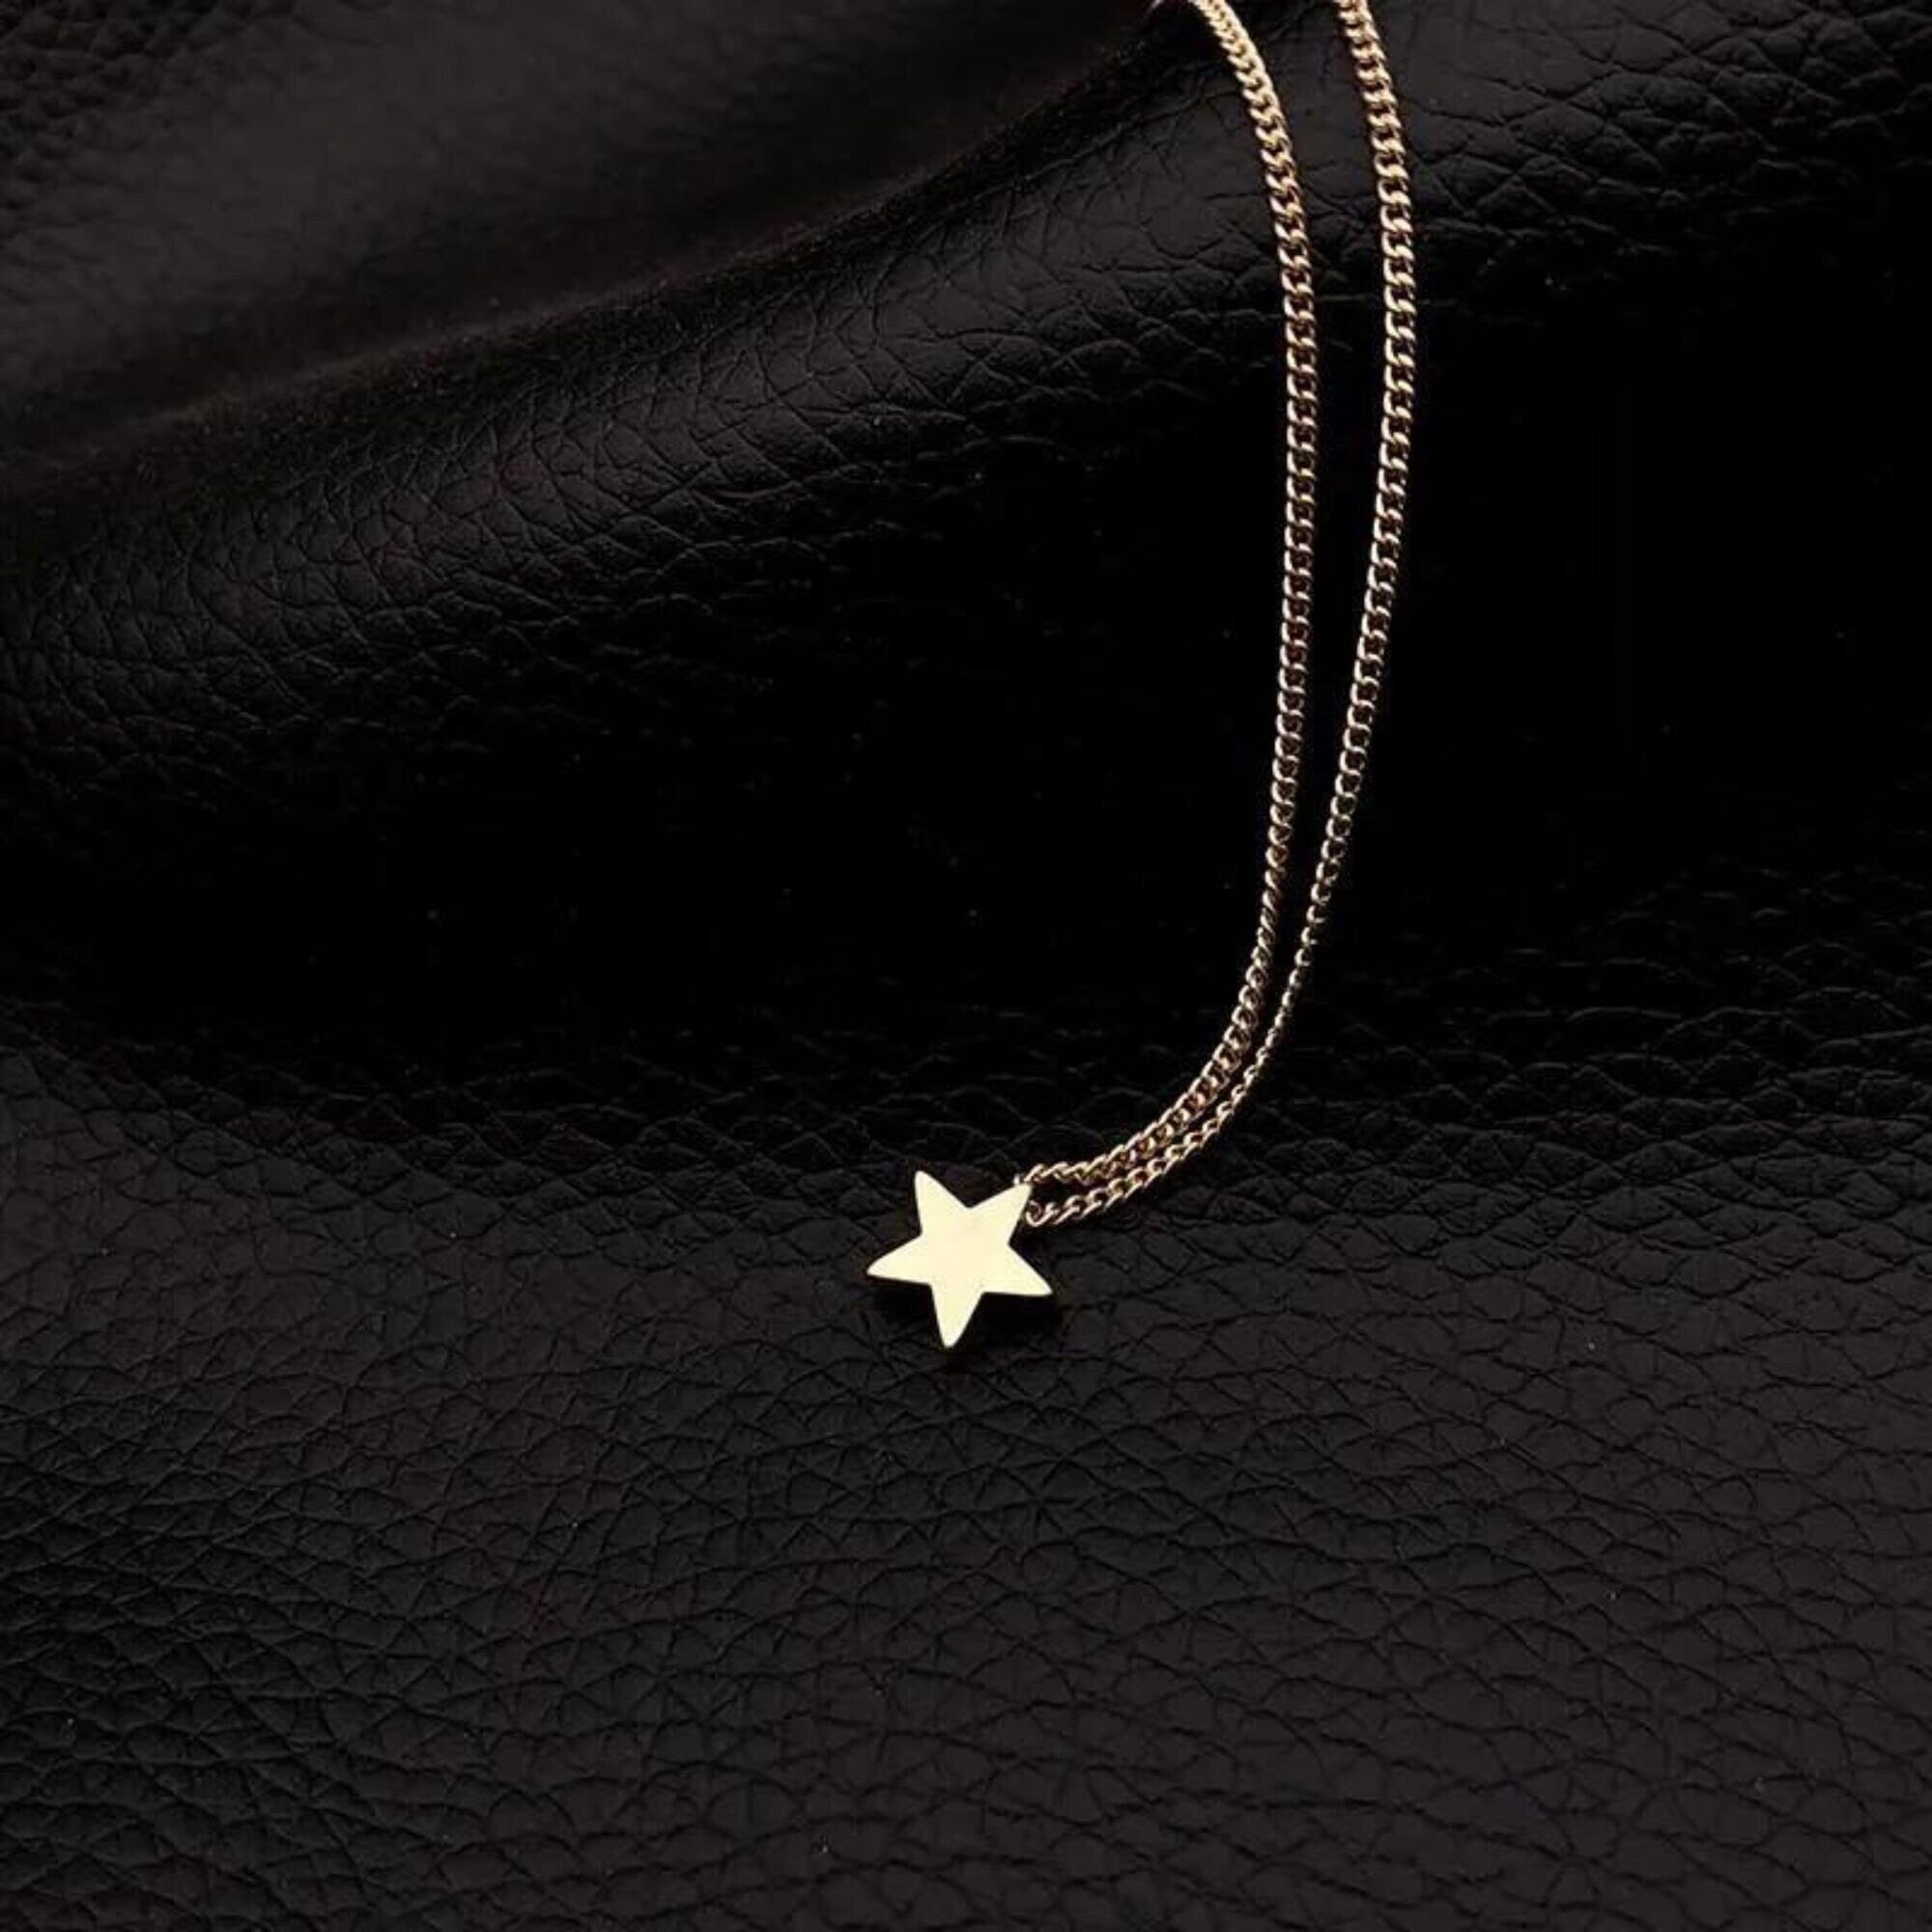 Star Dainty Necklace, Good Friends Like Stars, Friendship gift, Birthday Far Away Christmas Gift for Best Friends